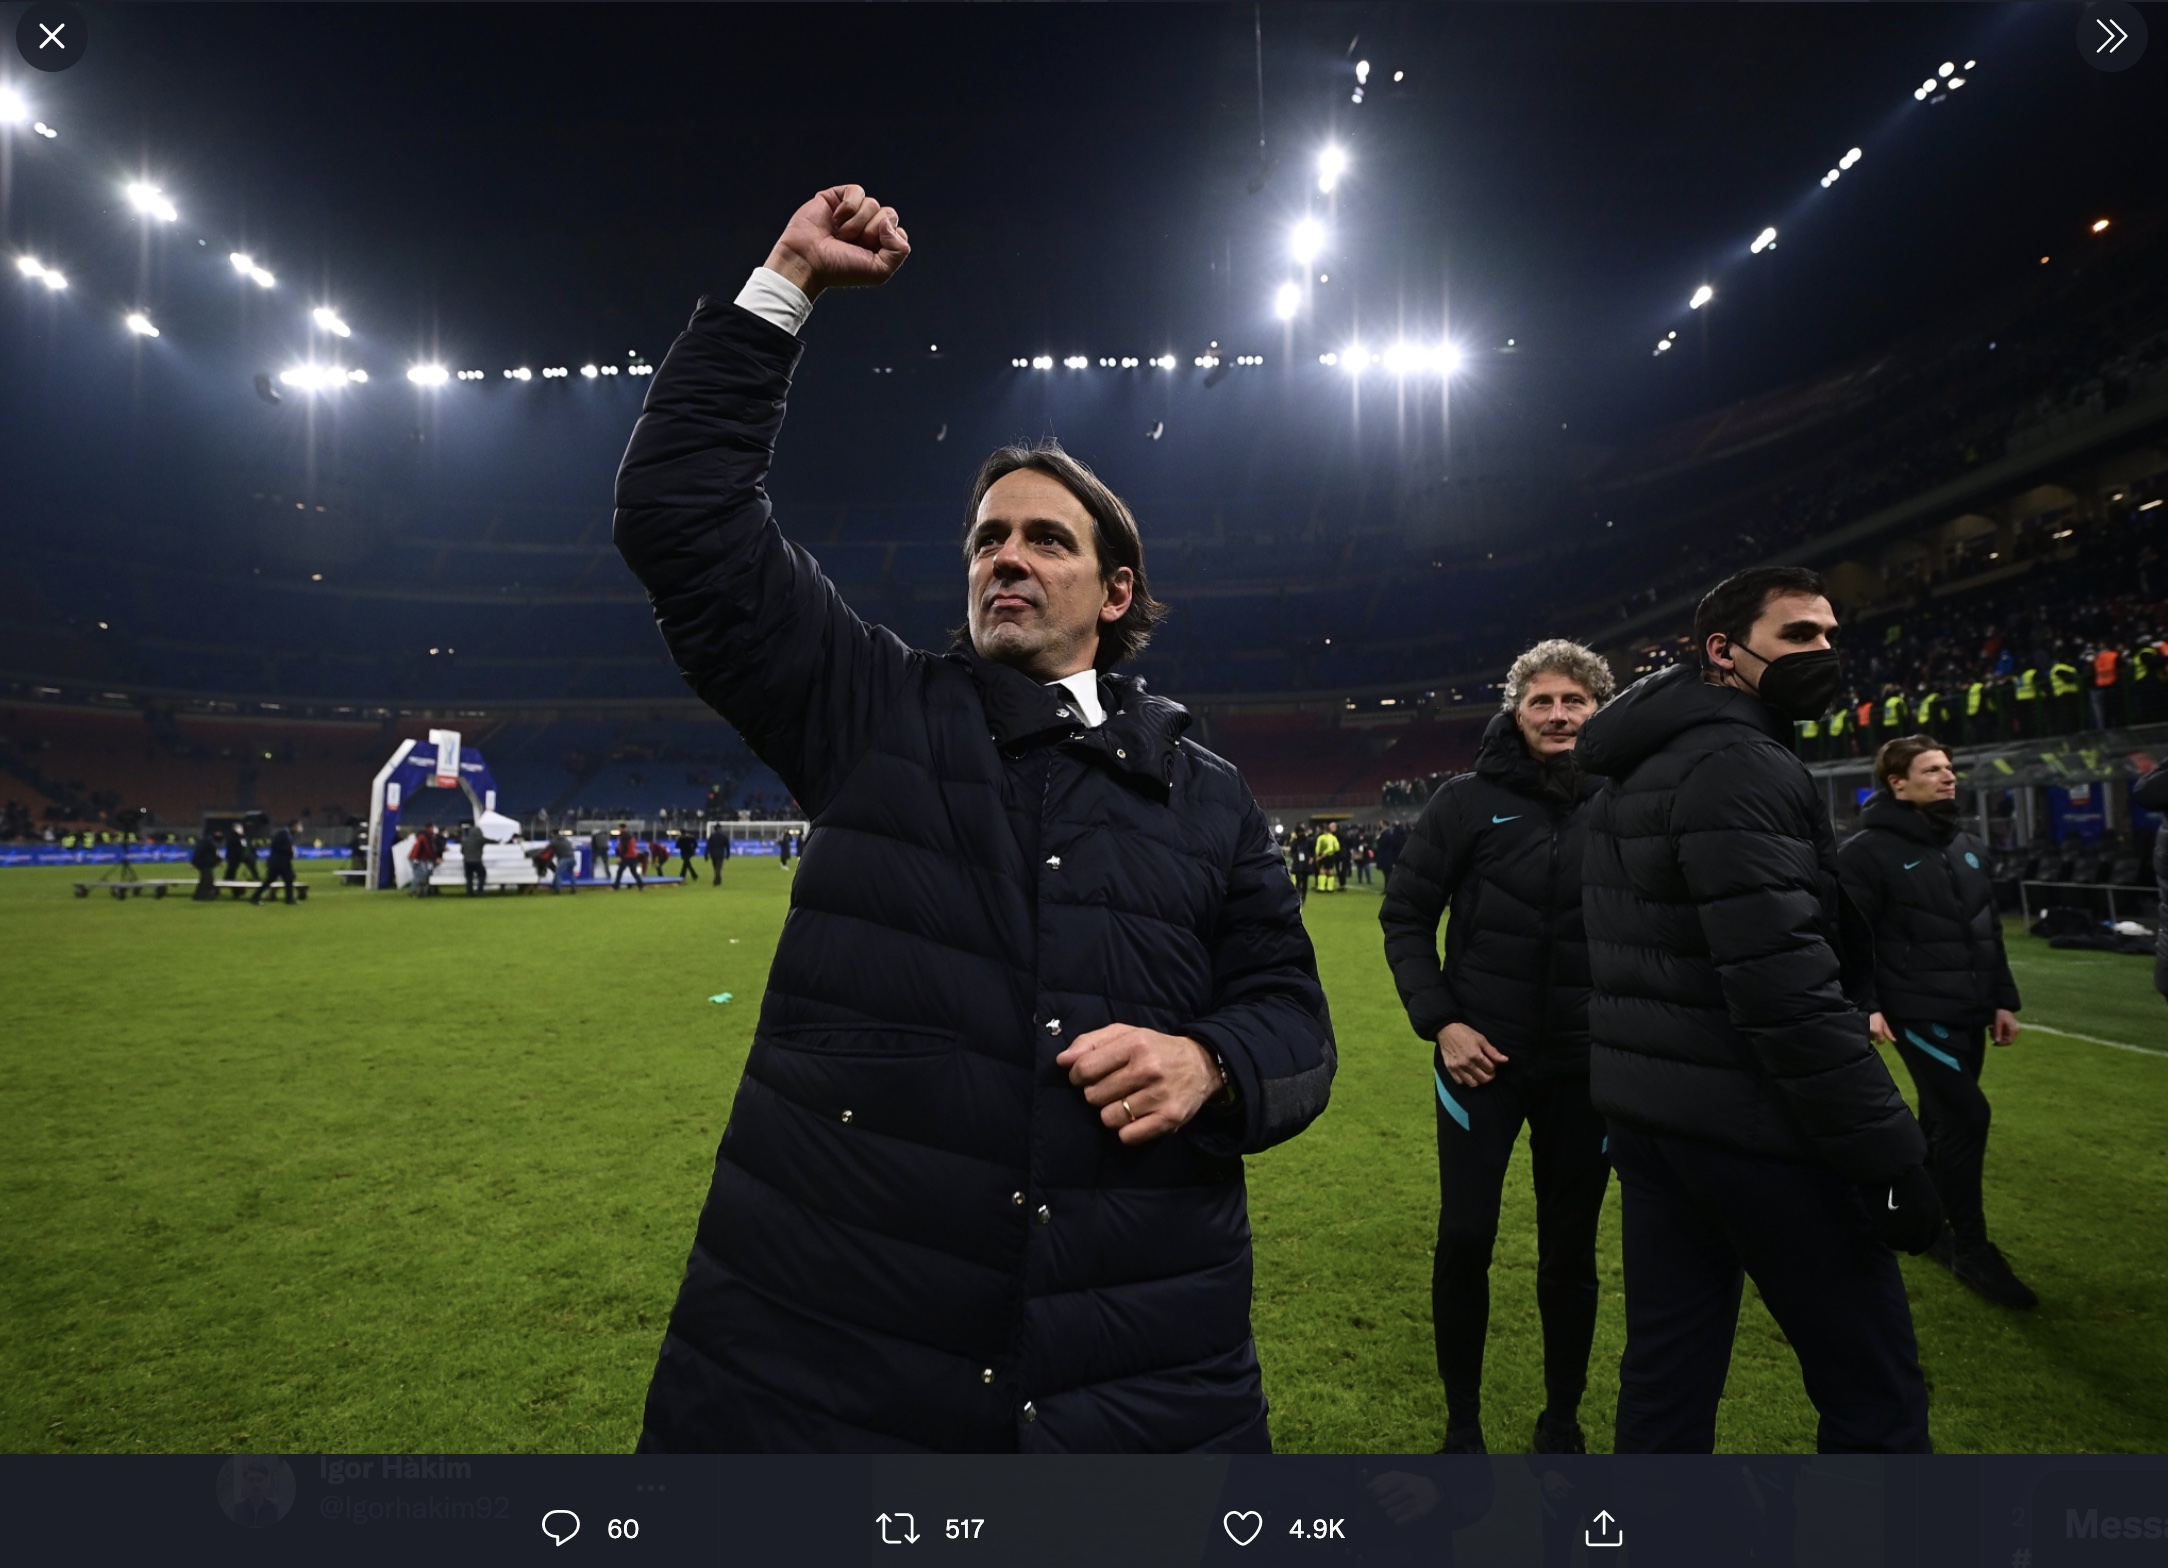 Jelang Inter Milan vs AS Roma, Simone Inzaghi Menilai Laga seperti Final